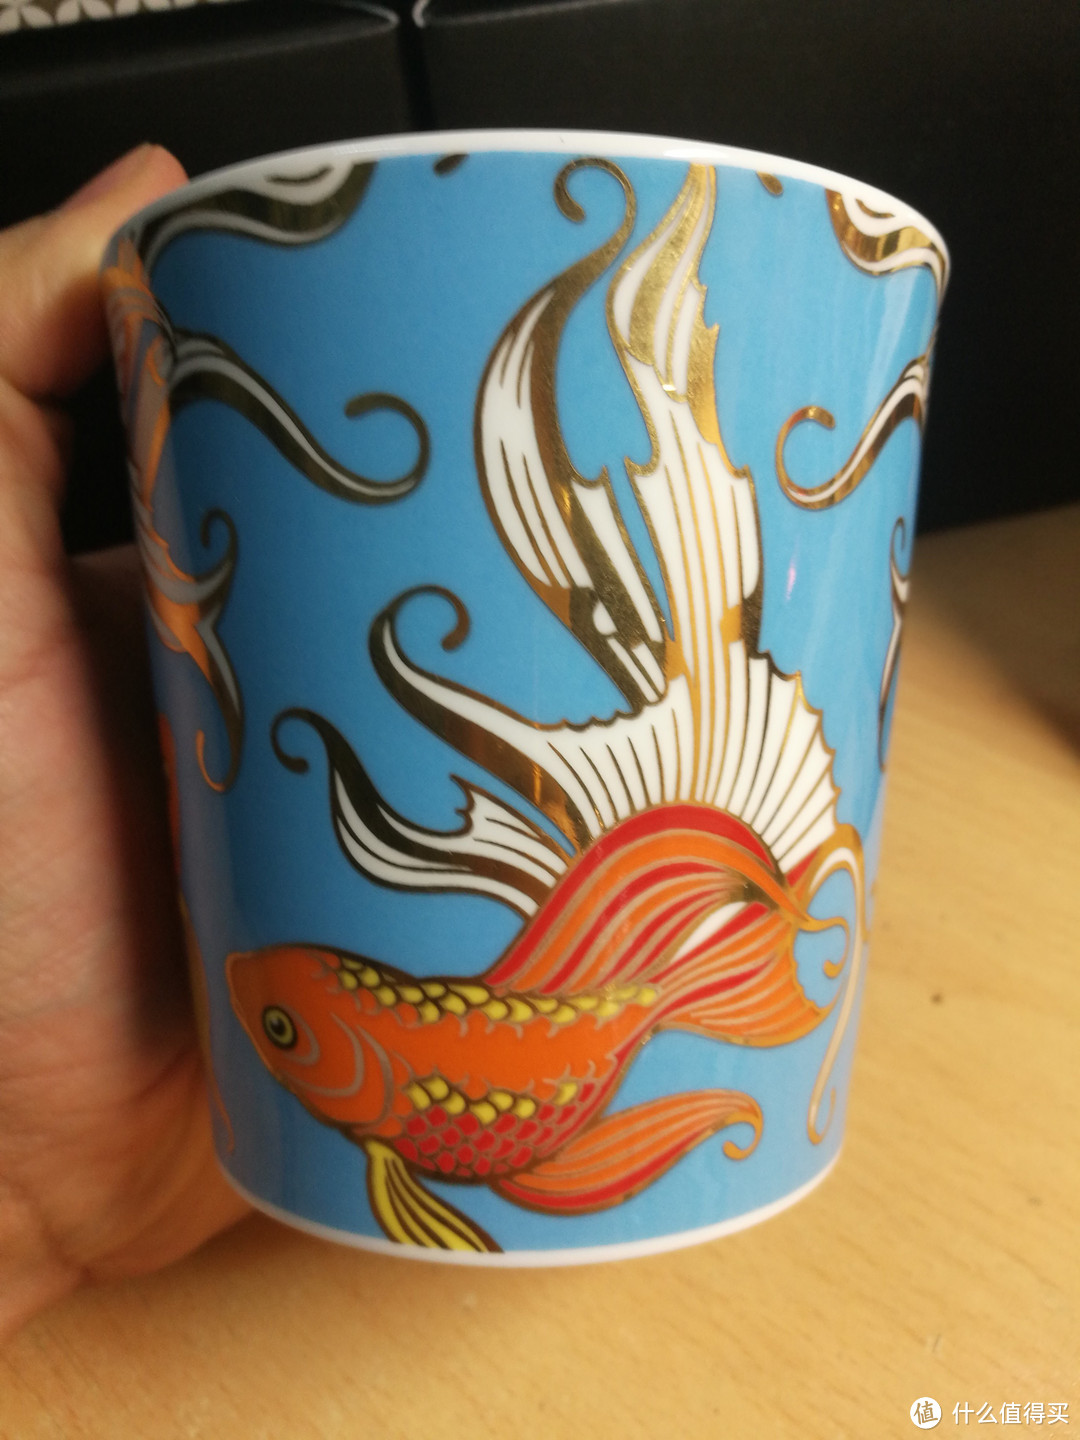 DUNOON 骨瓷杯 神仙鱼-金鱼